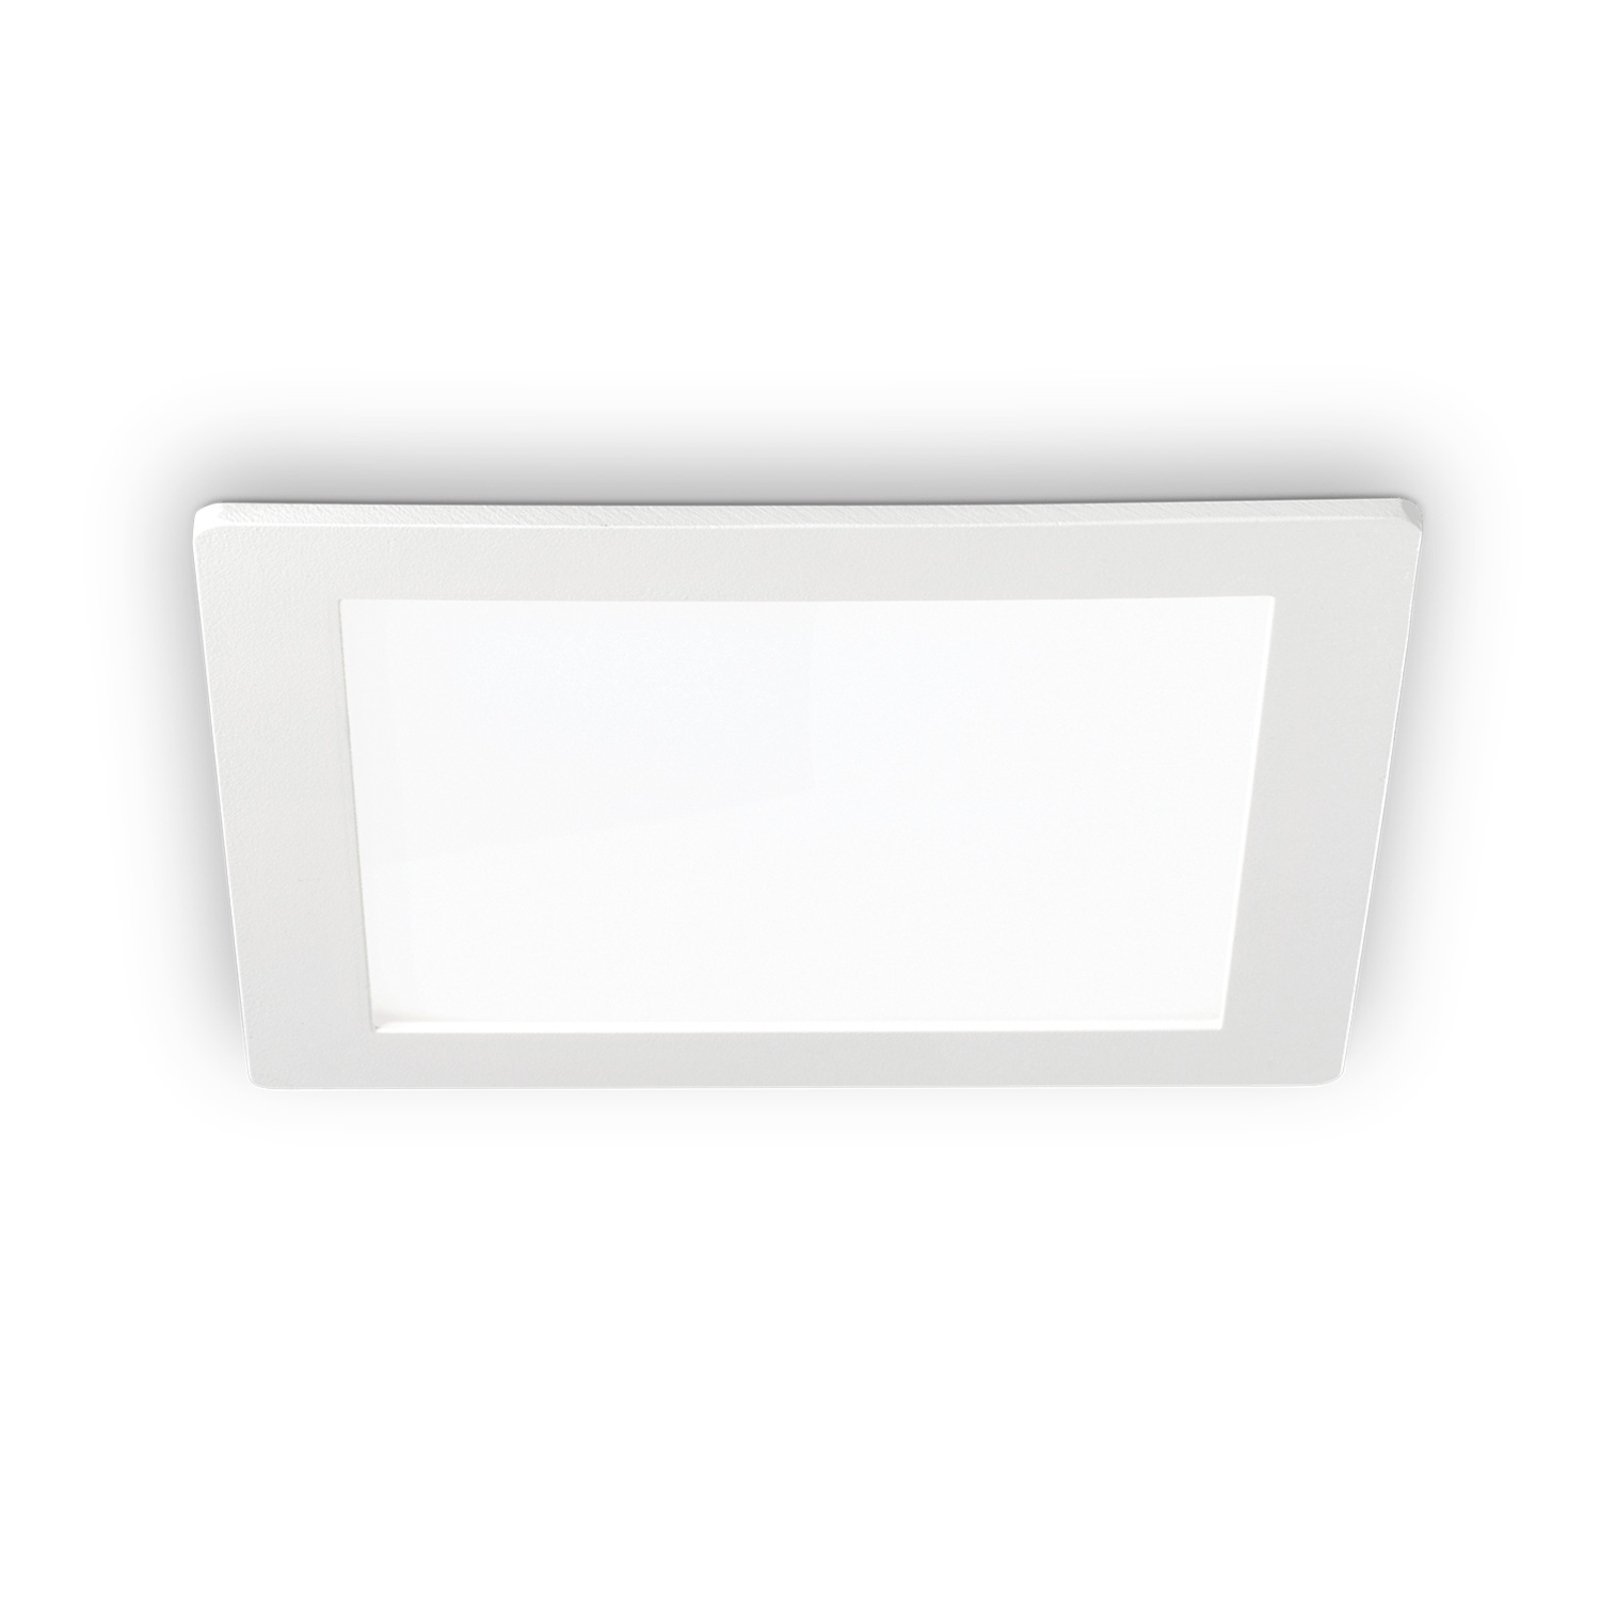 LED-takinbyggnadslampa Groove kvadrat 16,8x16,8 cm